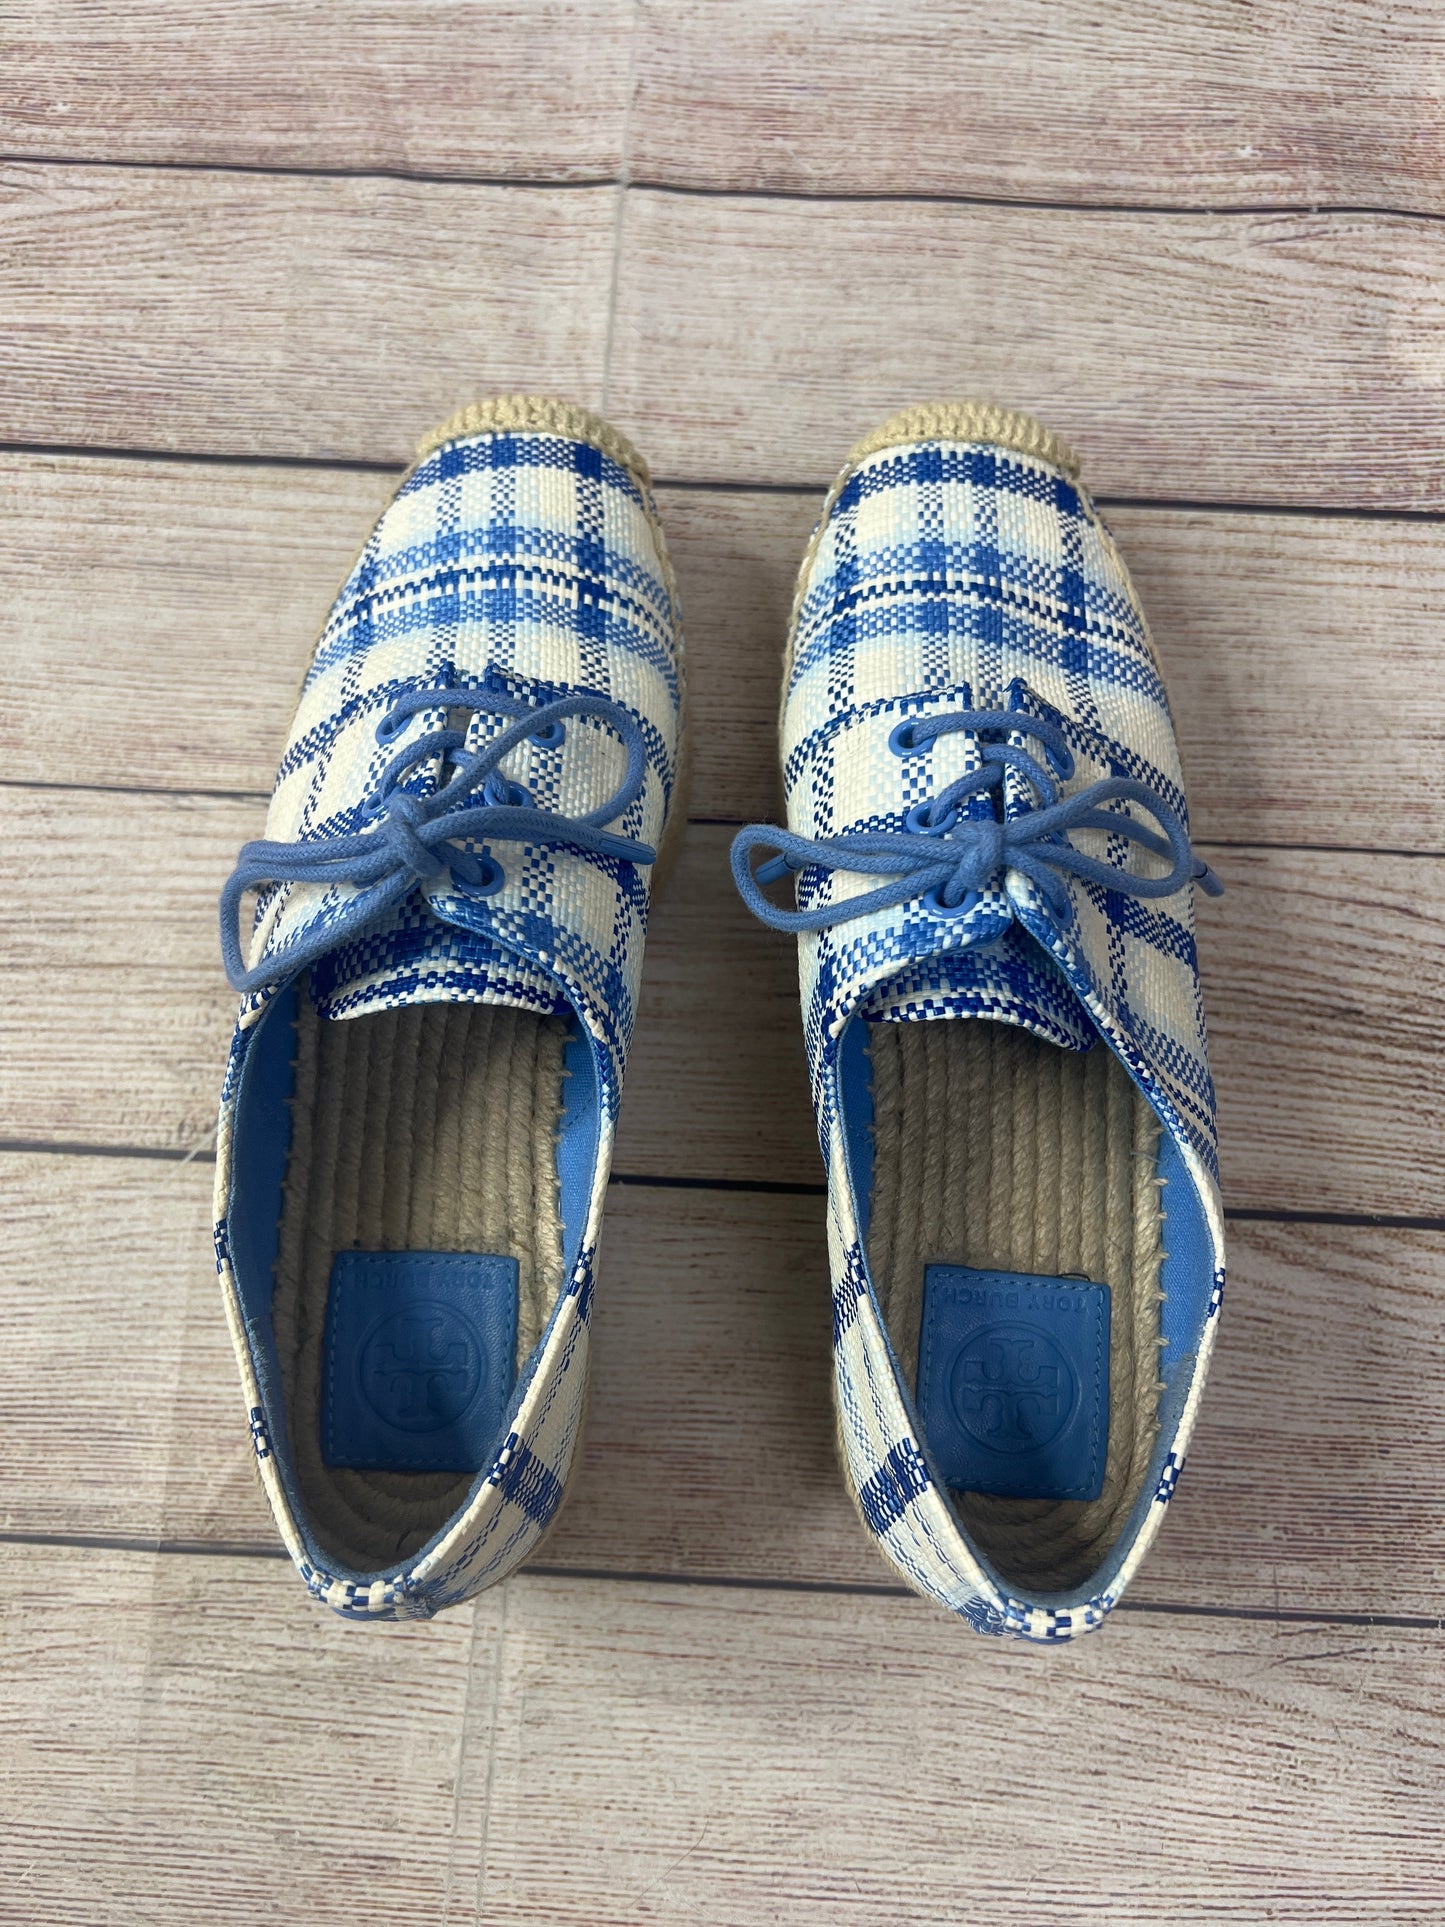 Blue & White Shoes Heels Platform Tory Burch, Size 7